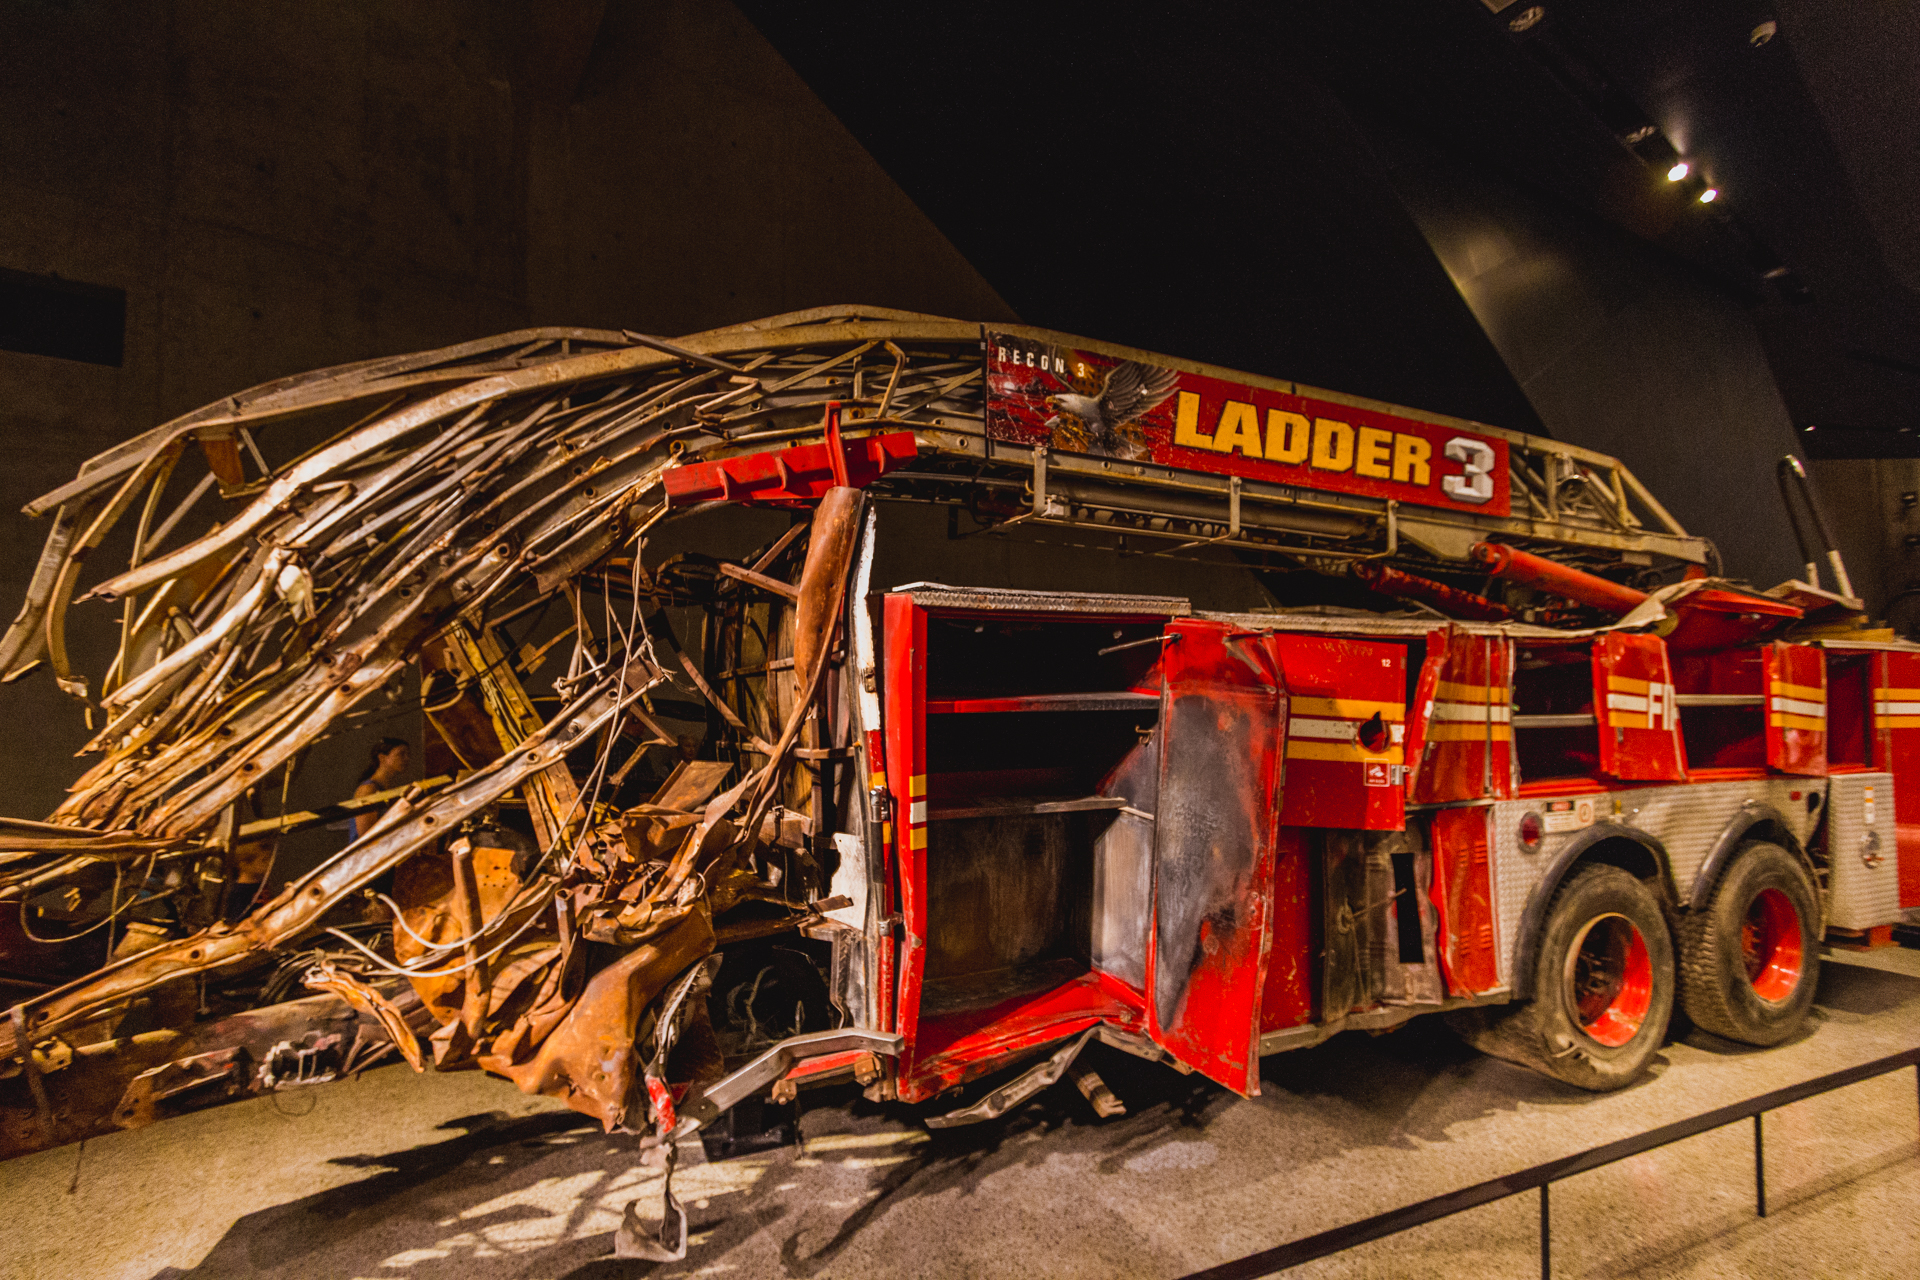 9/11 Memorial and Museum - FDNY Ladder 3 - Nathan Adler/RiverScene